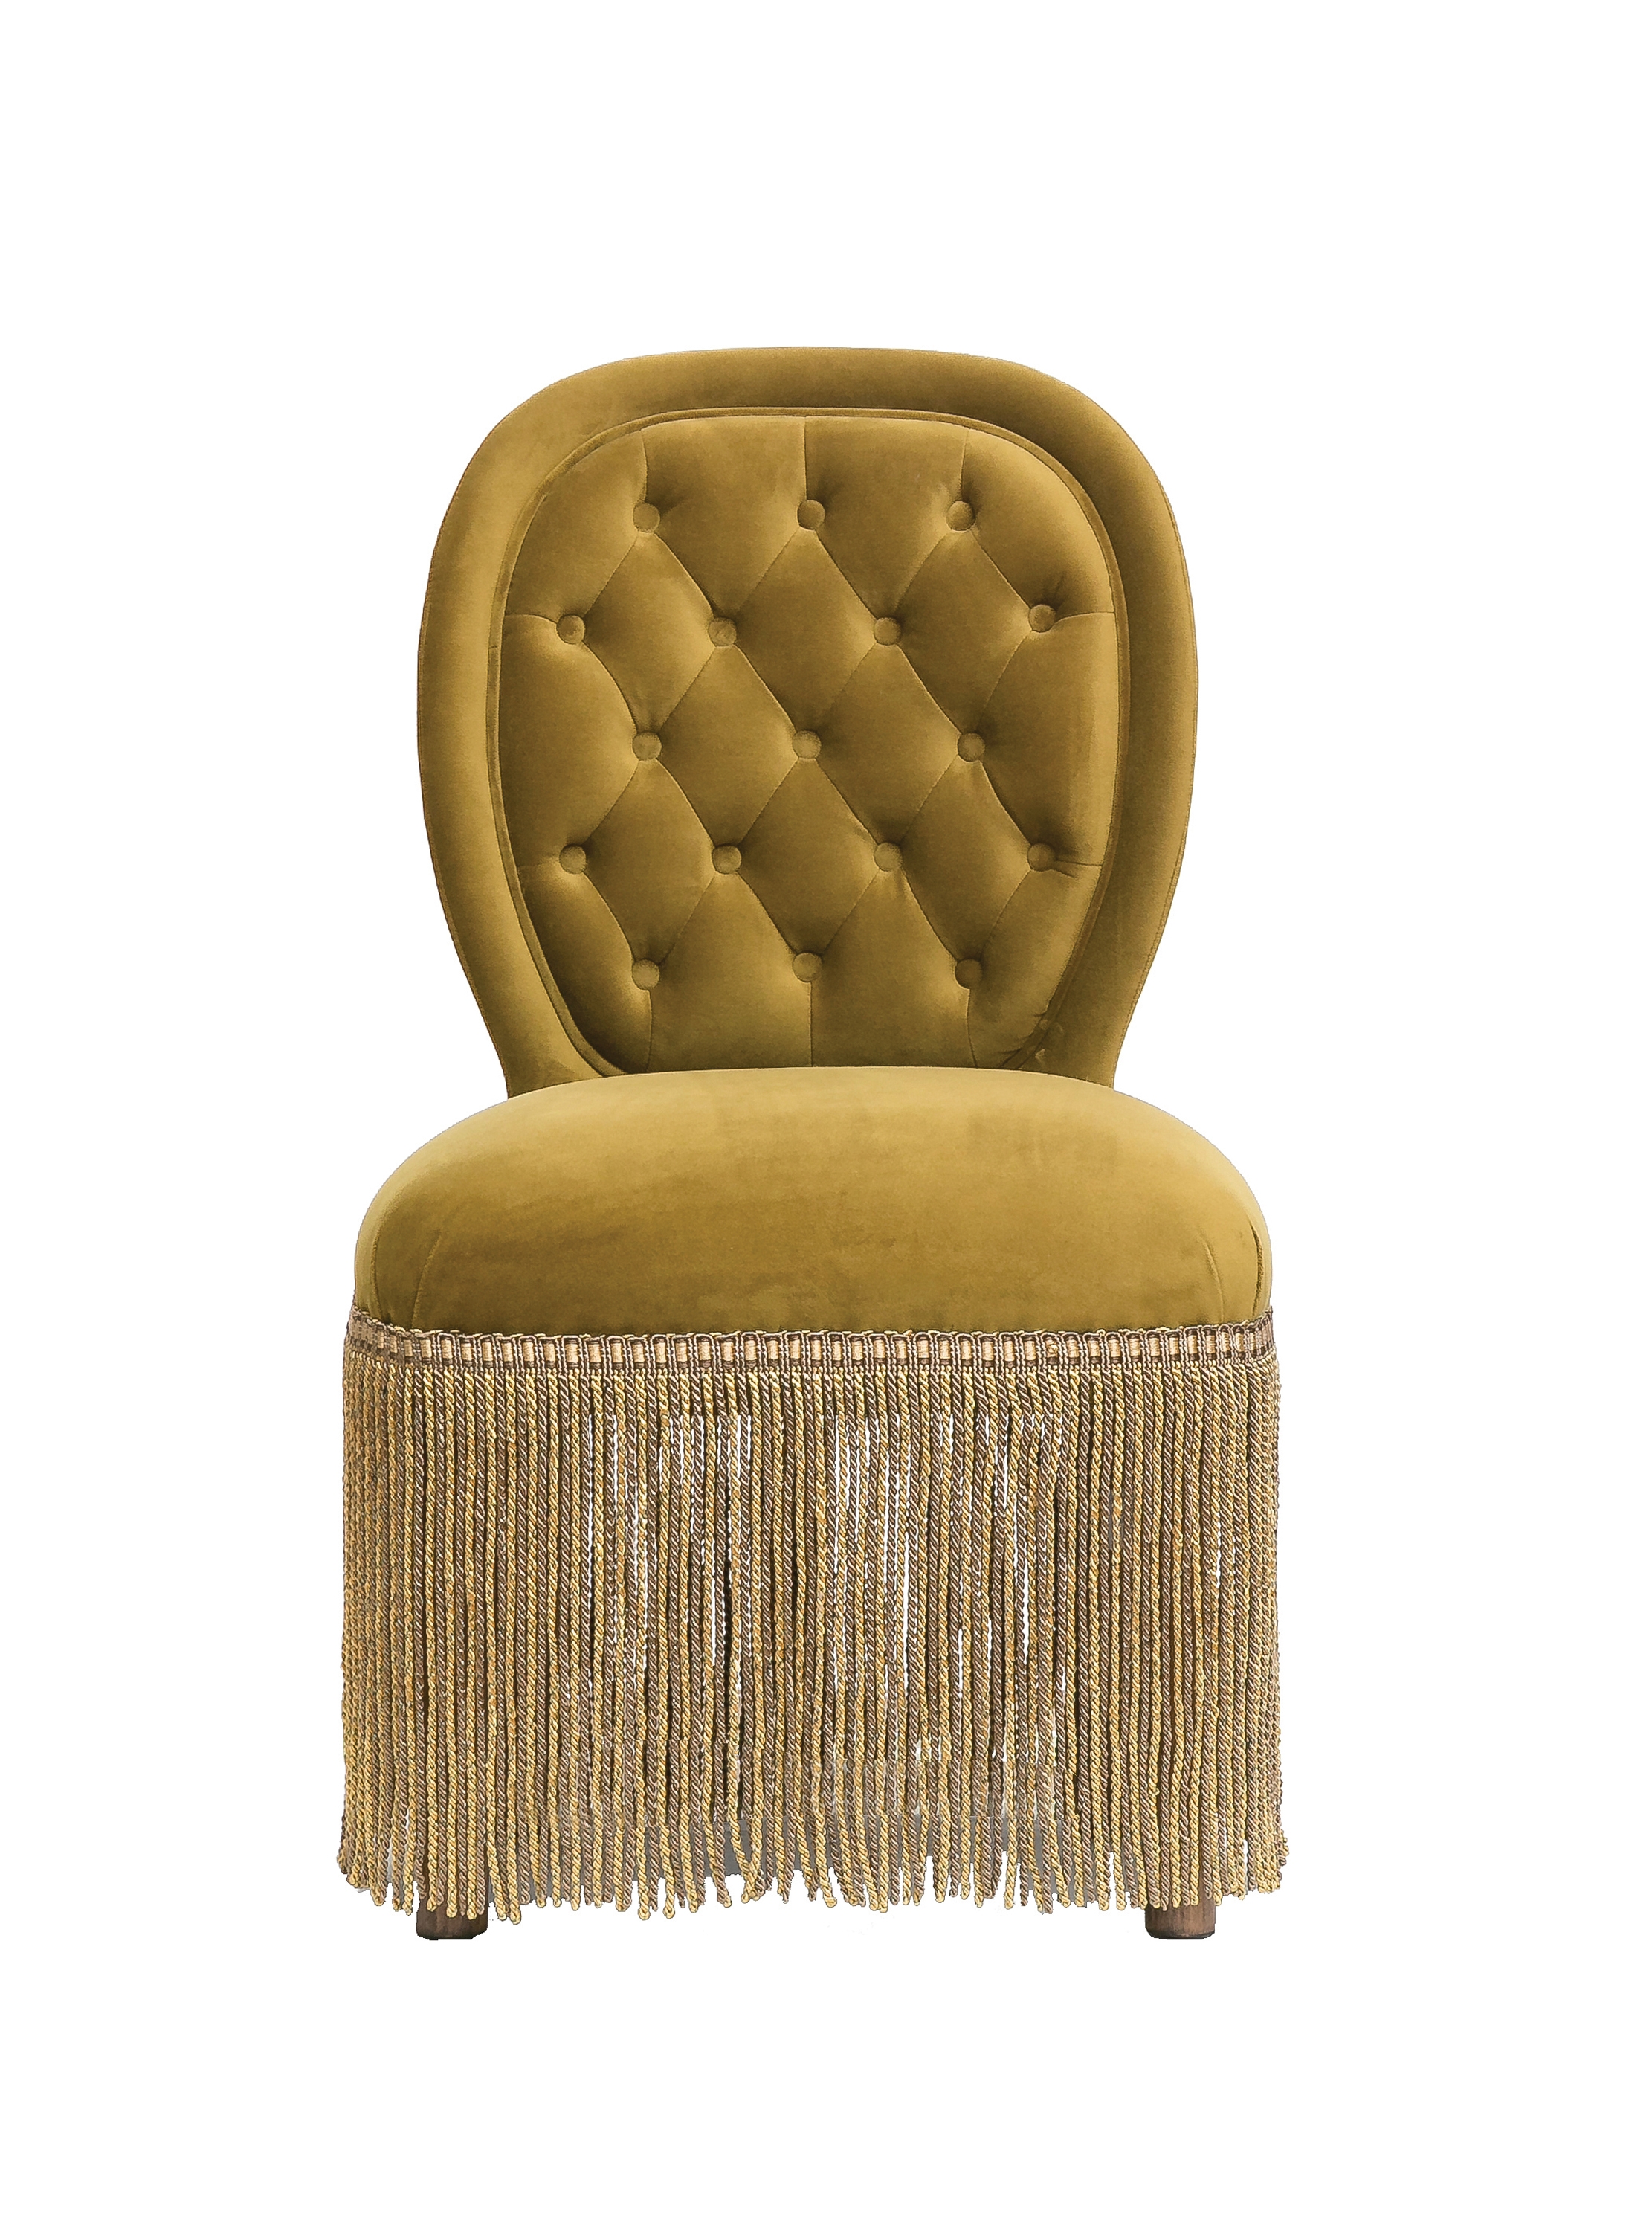 Armless Vintage Reproduction Velvet Chair with Tufted Back, Fringe Base & Wood Frame - Image 0